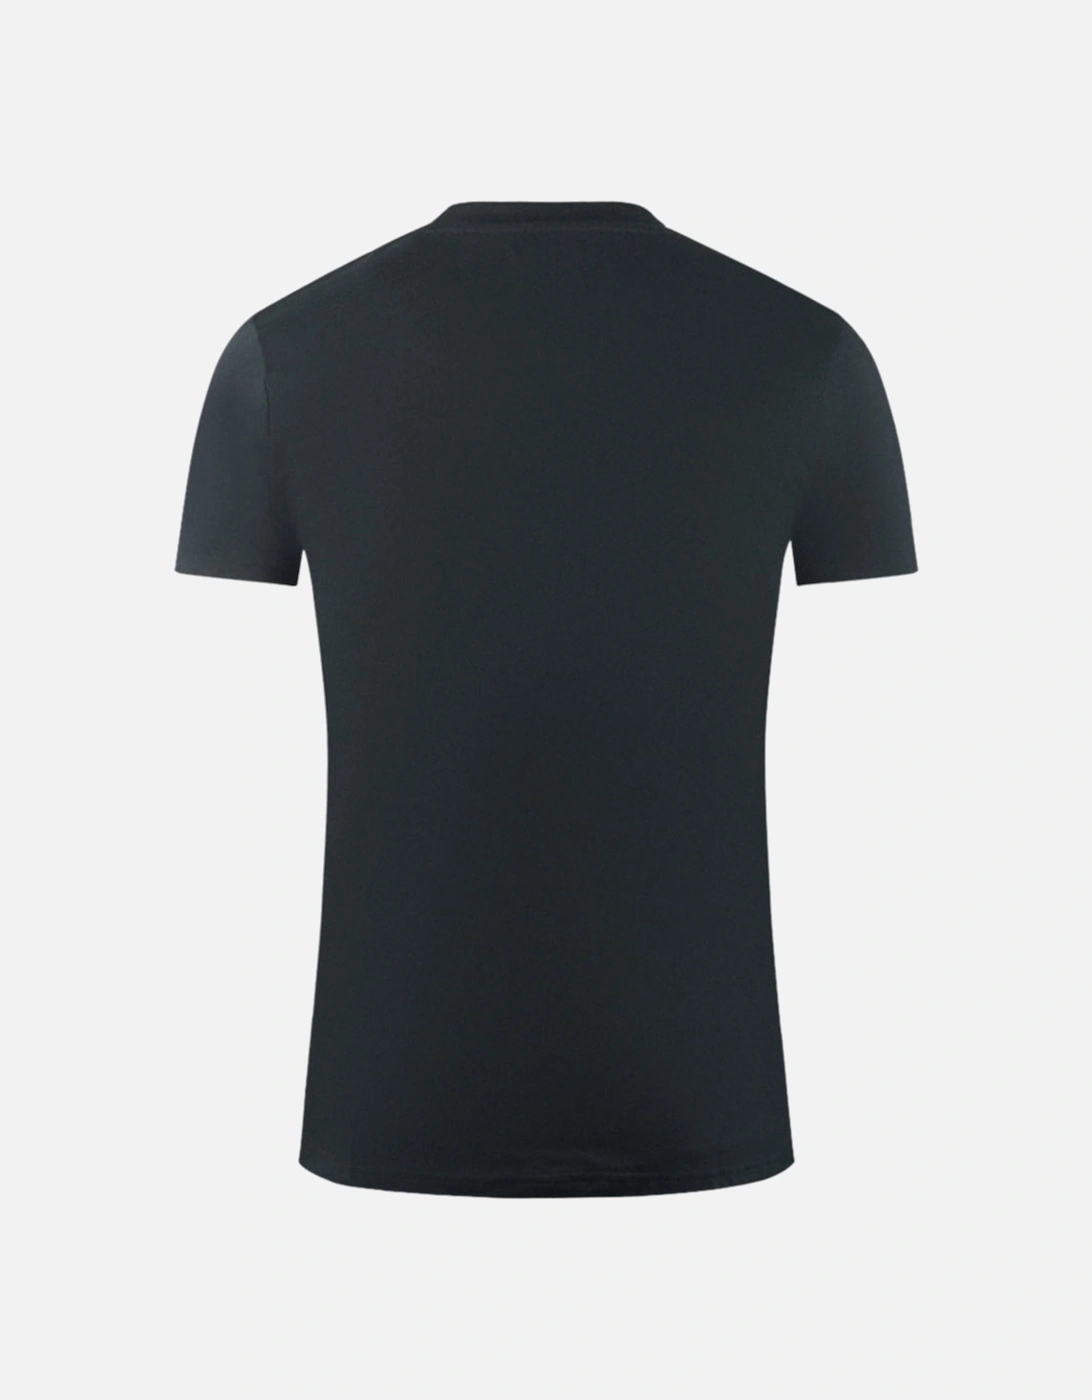 London Aldis Brand Logo On Chest Black T-Shirt